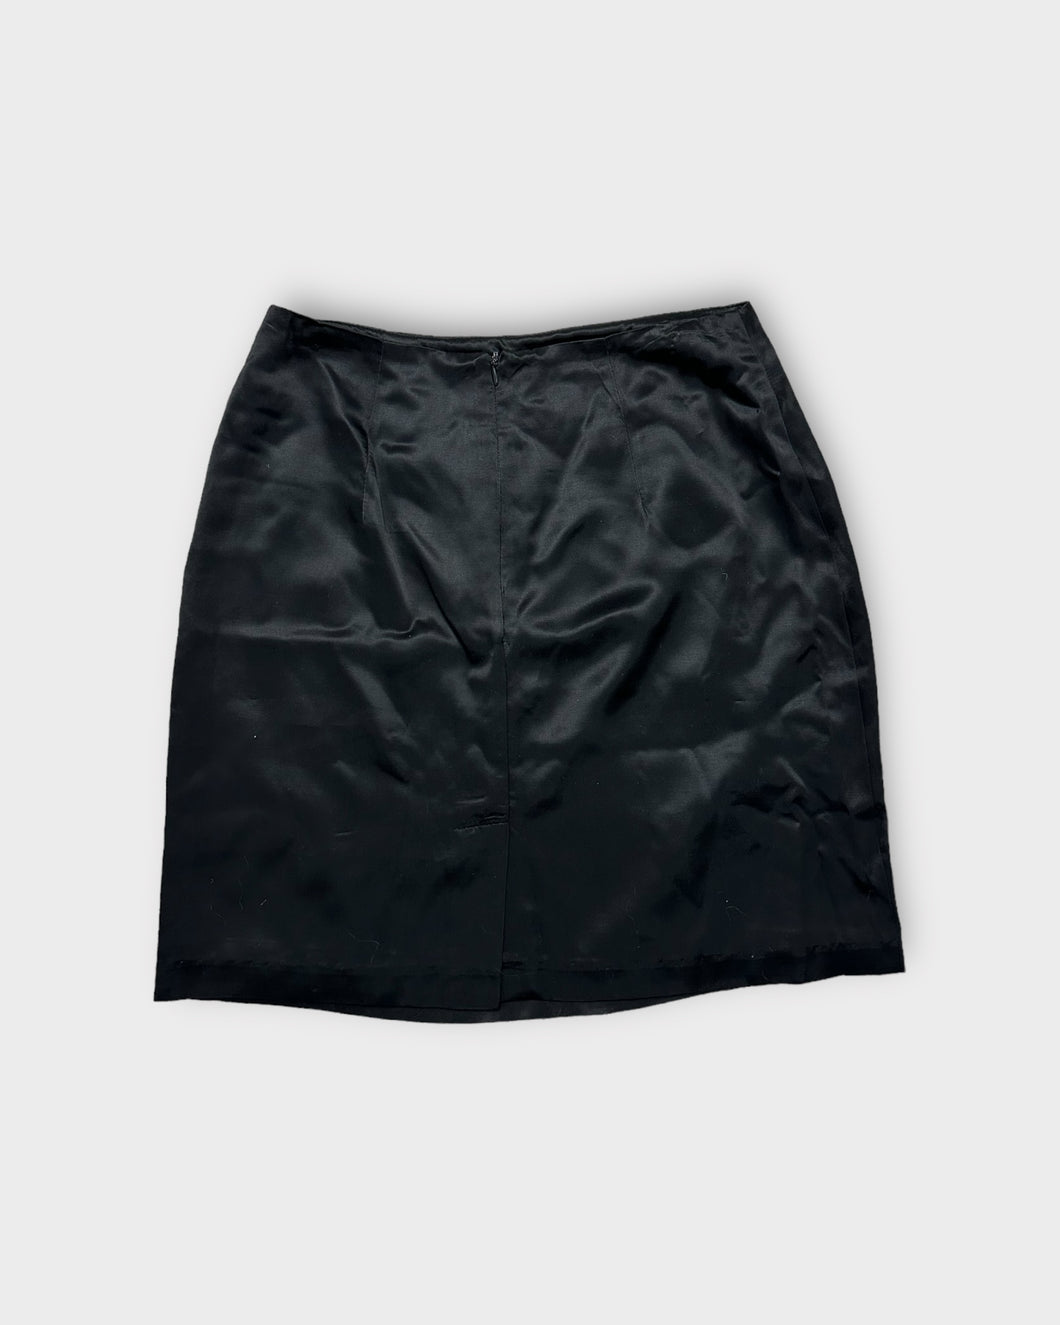 ILYSE HART LTD Satin Black Mini Skirt (10)